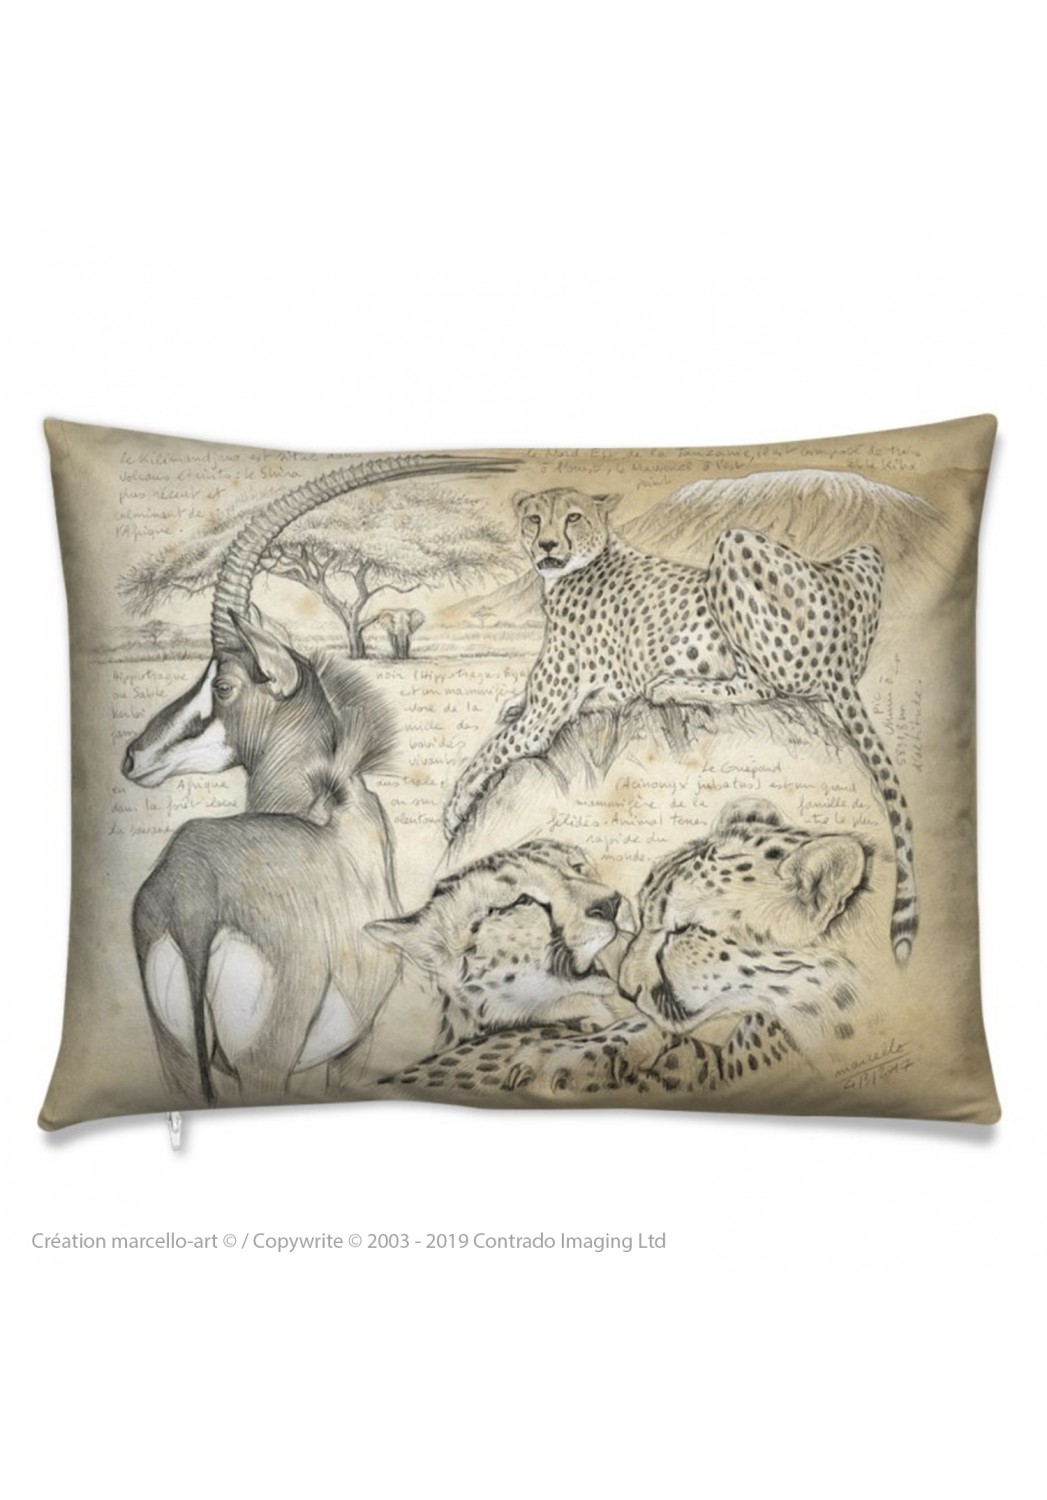 Marcello-art: Fashion accessory Cushion 363 cheetah sable antelope